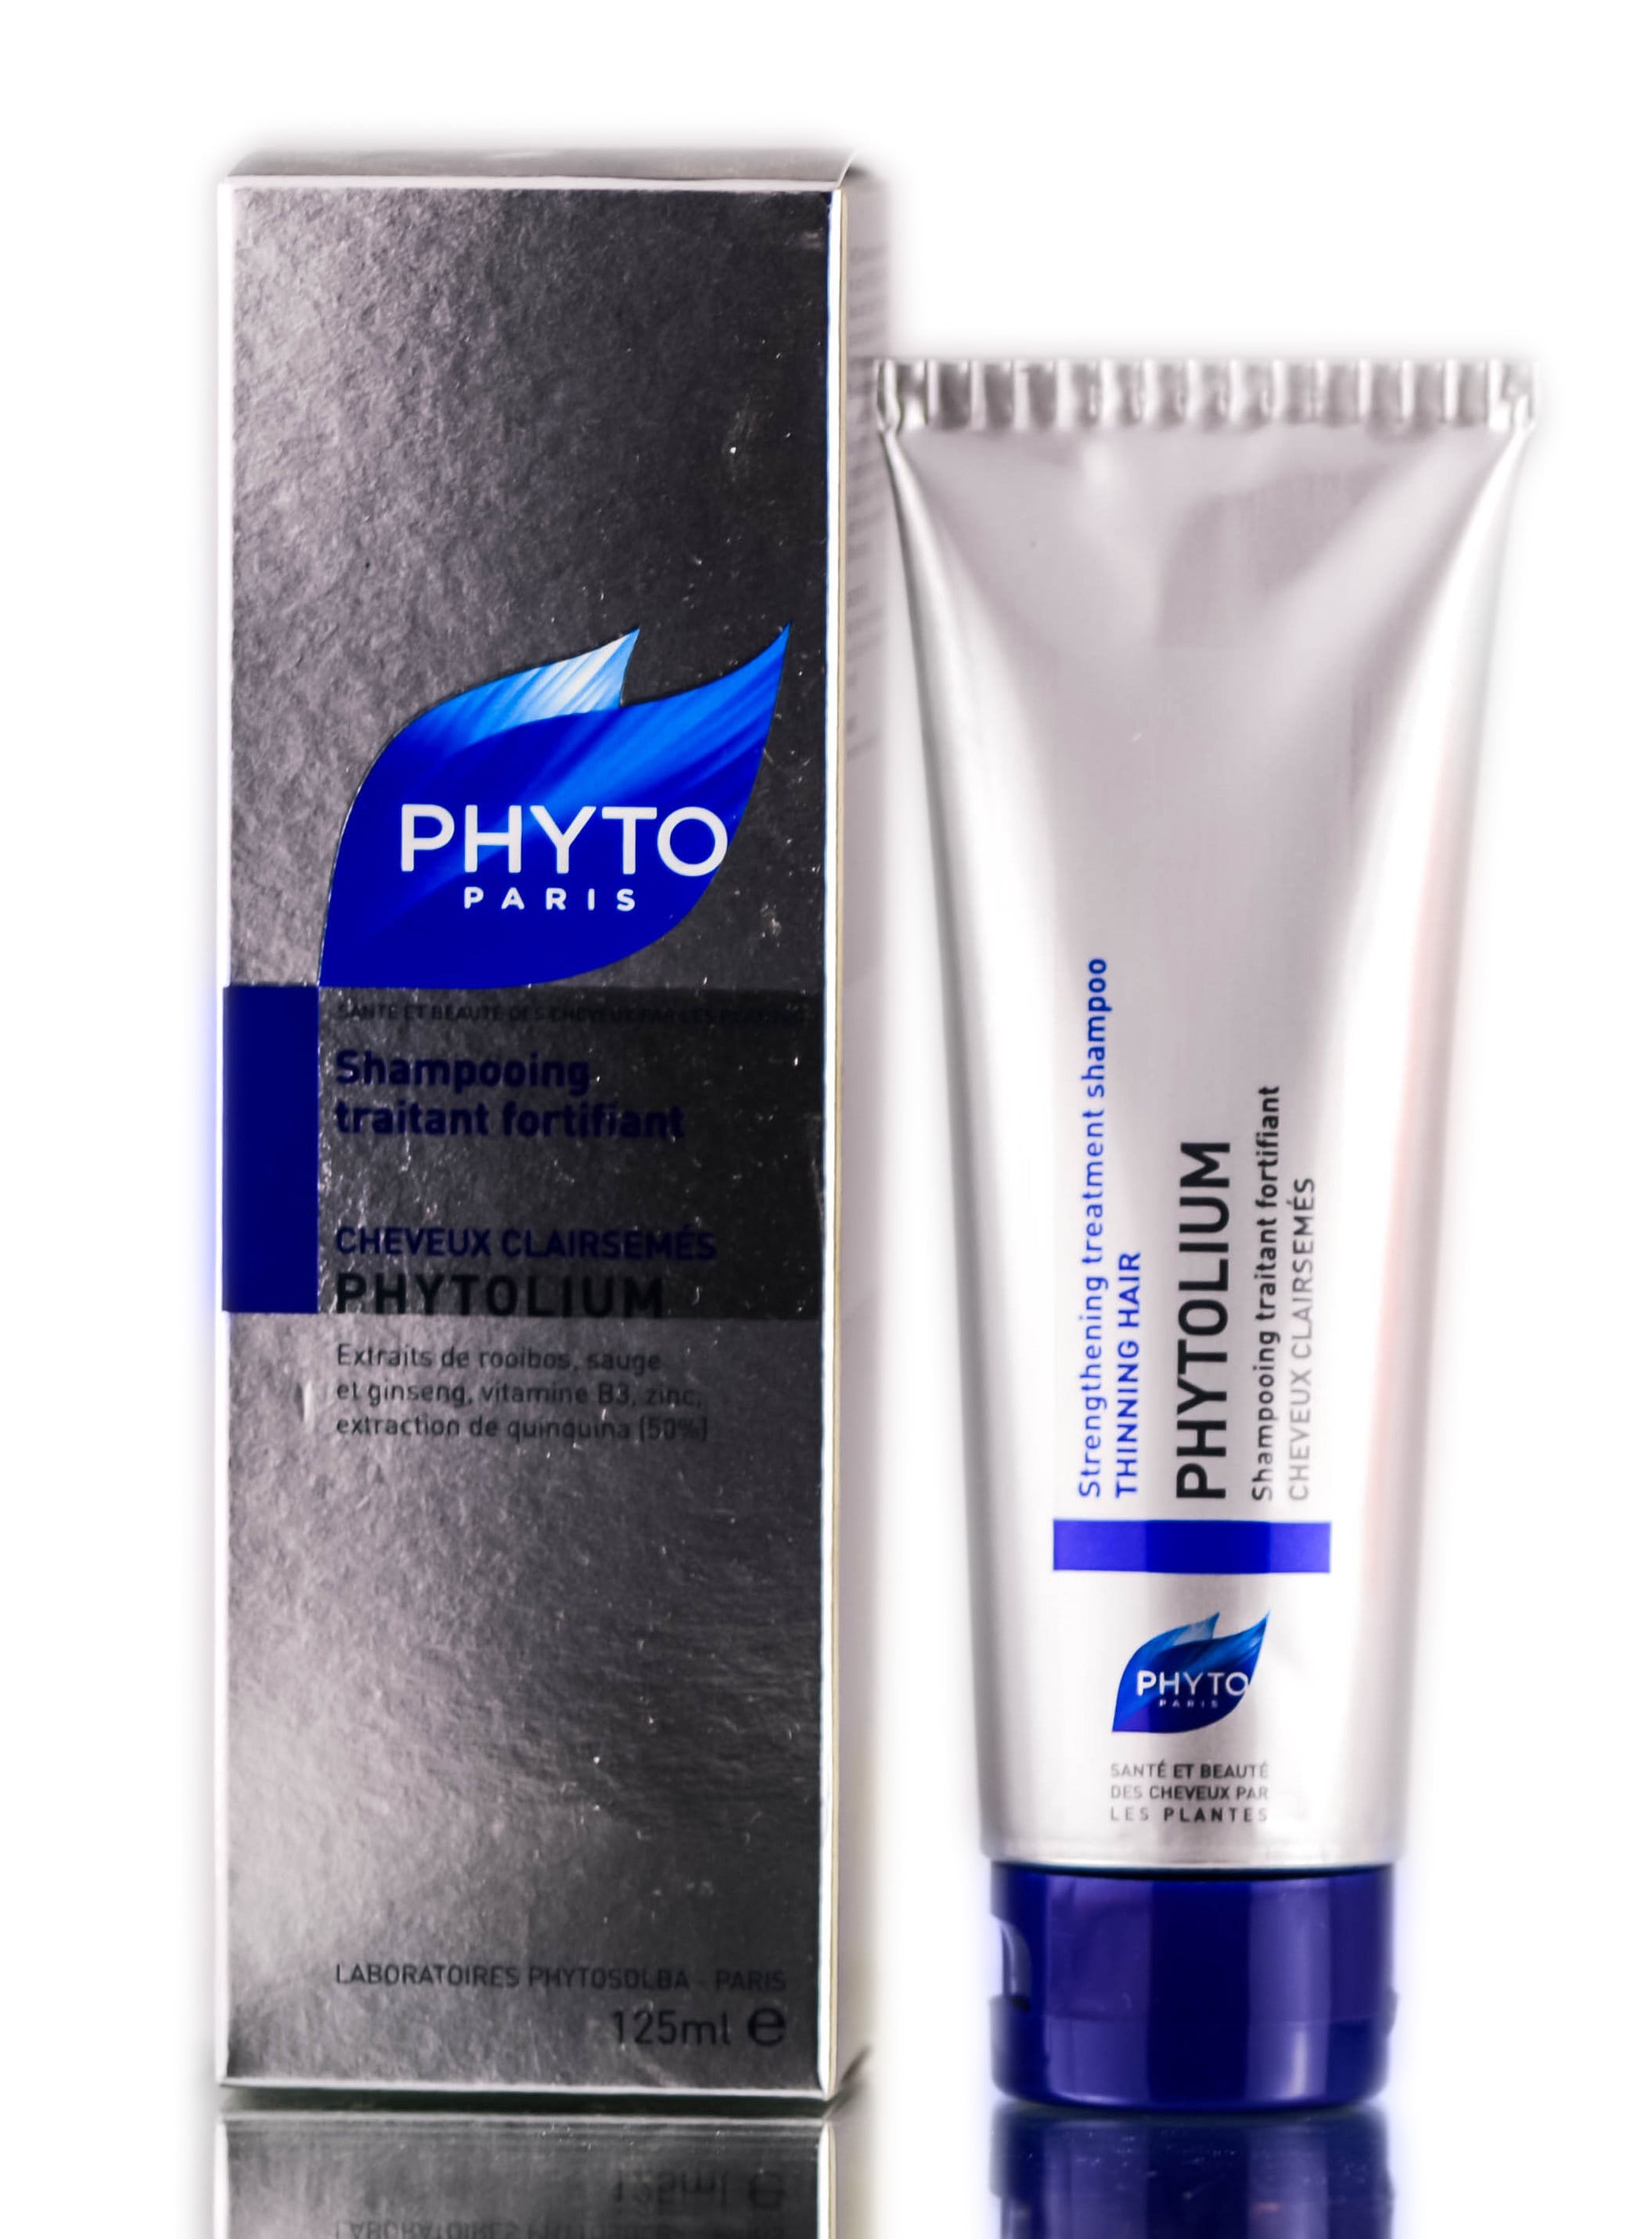 Phyto Phytolium Strengthening Treatment Shampoo, 4.2 Oz  Walmart.com